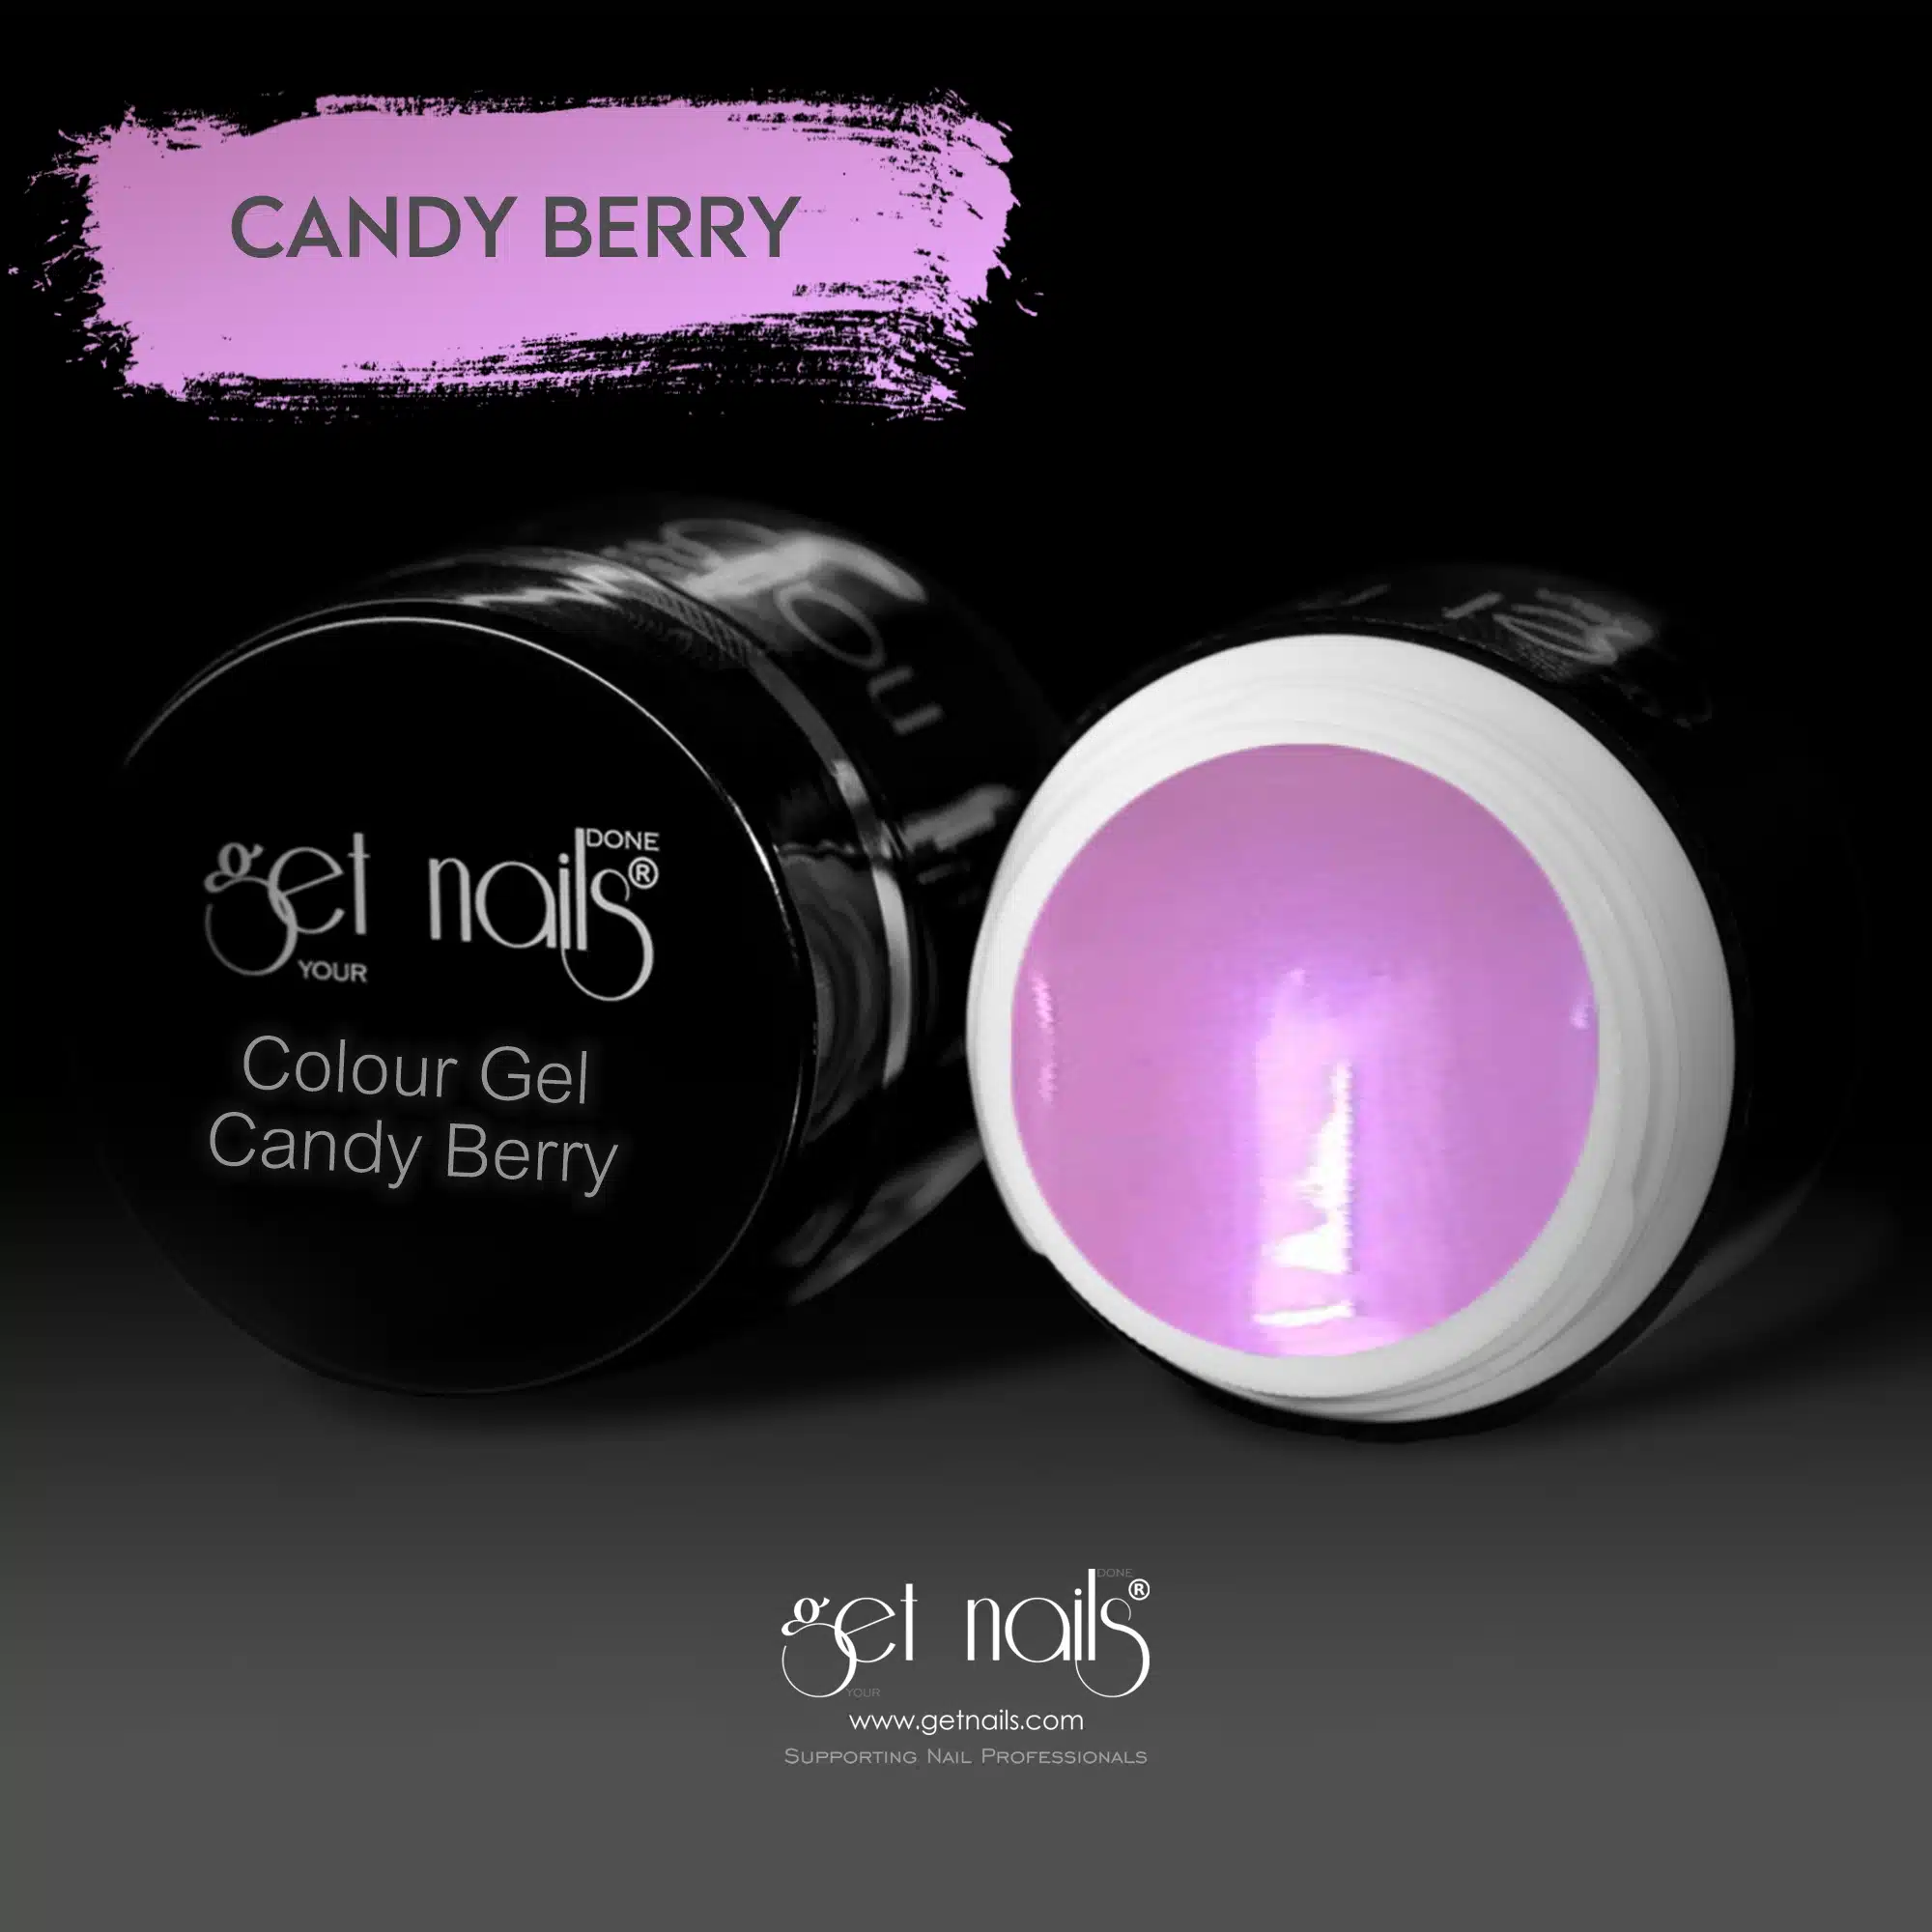 Get Nails Austria - Цветной гель Candy Berry 5g